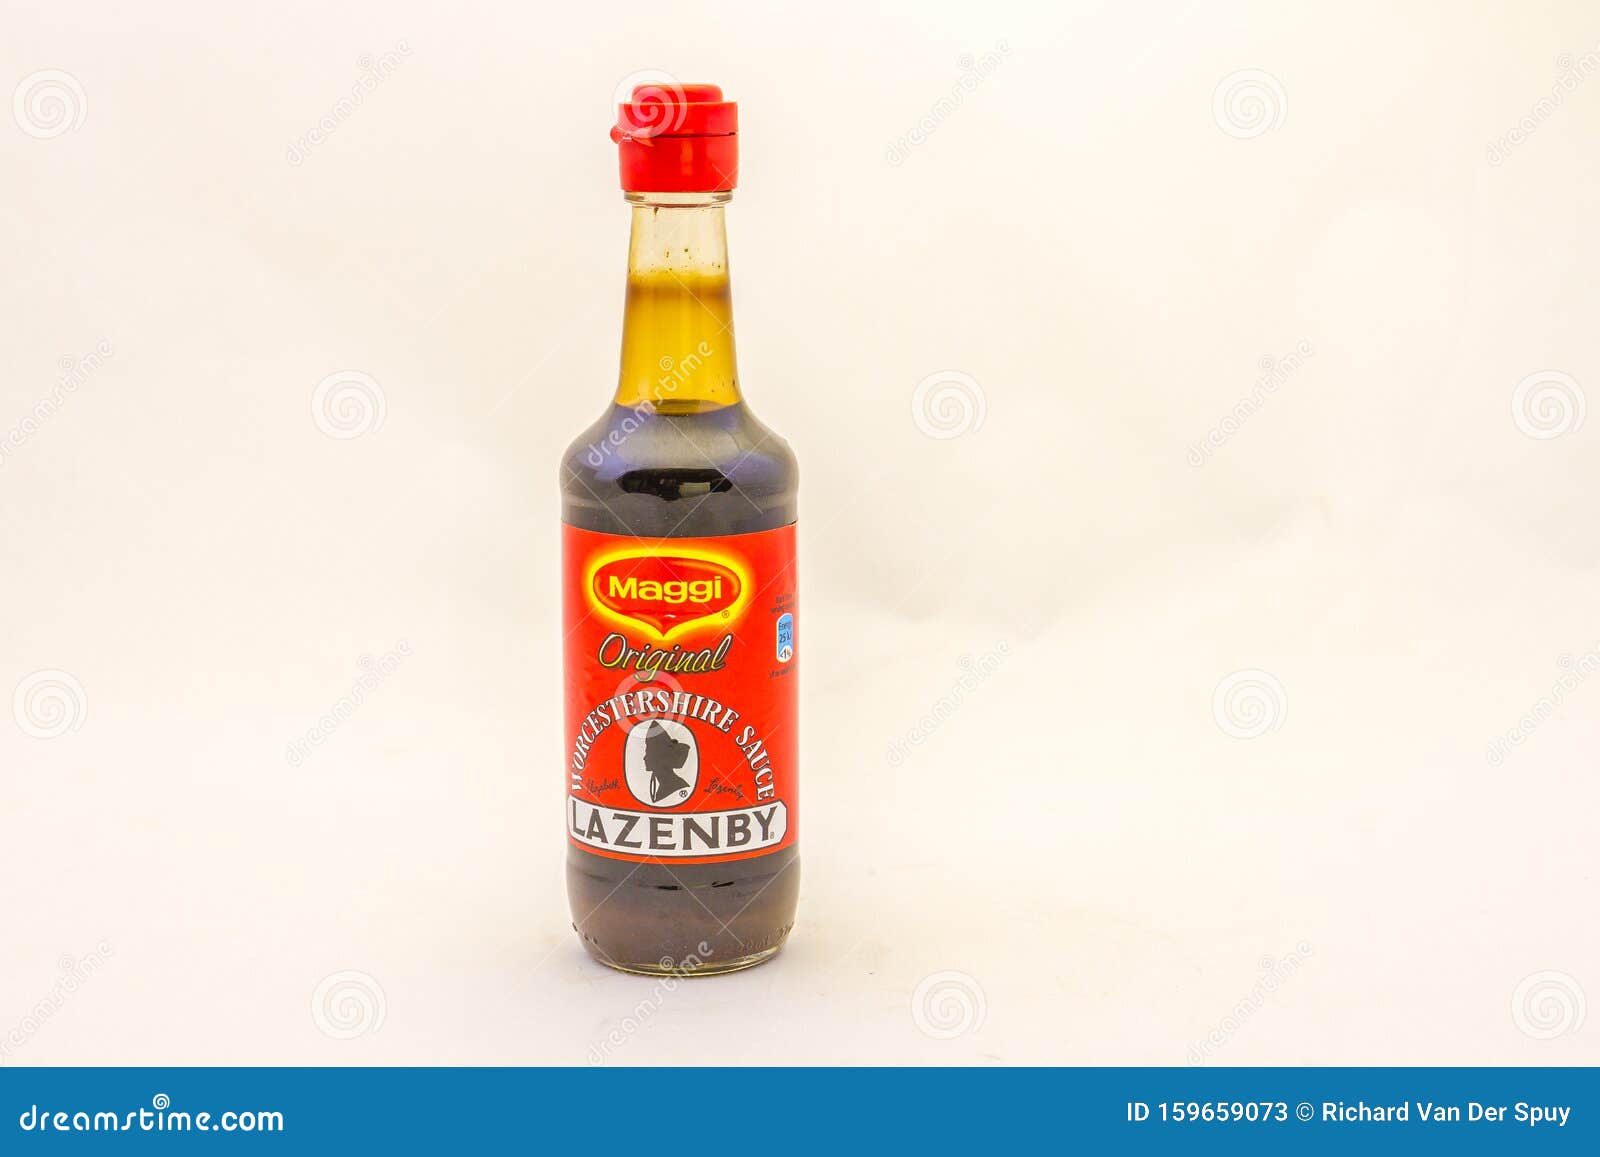 Maggi Lazenby Worcester Sauce Original 250ml – African Hut